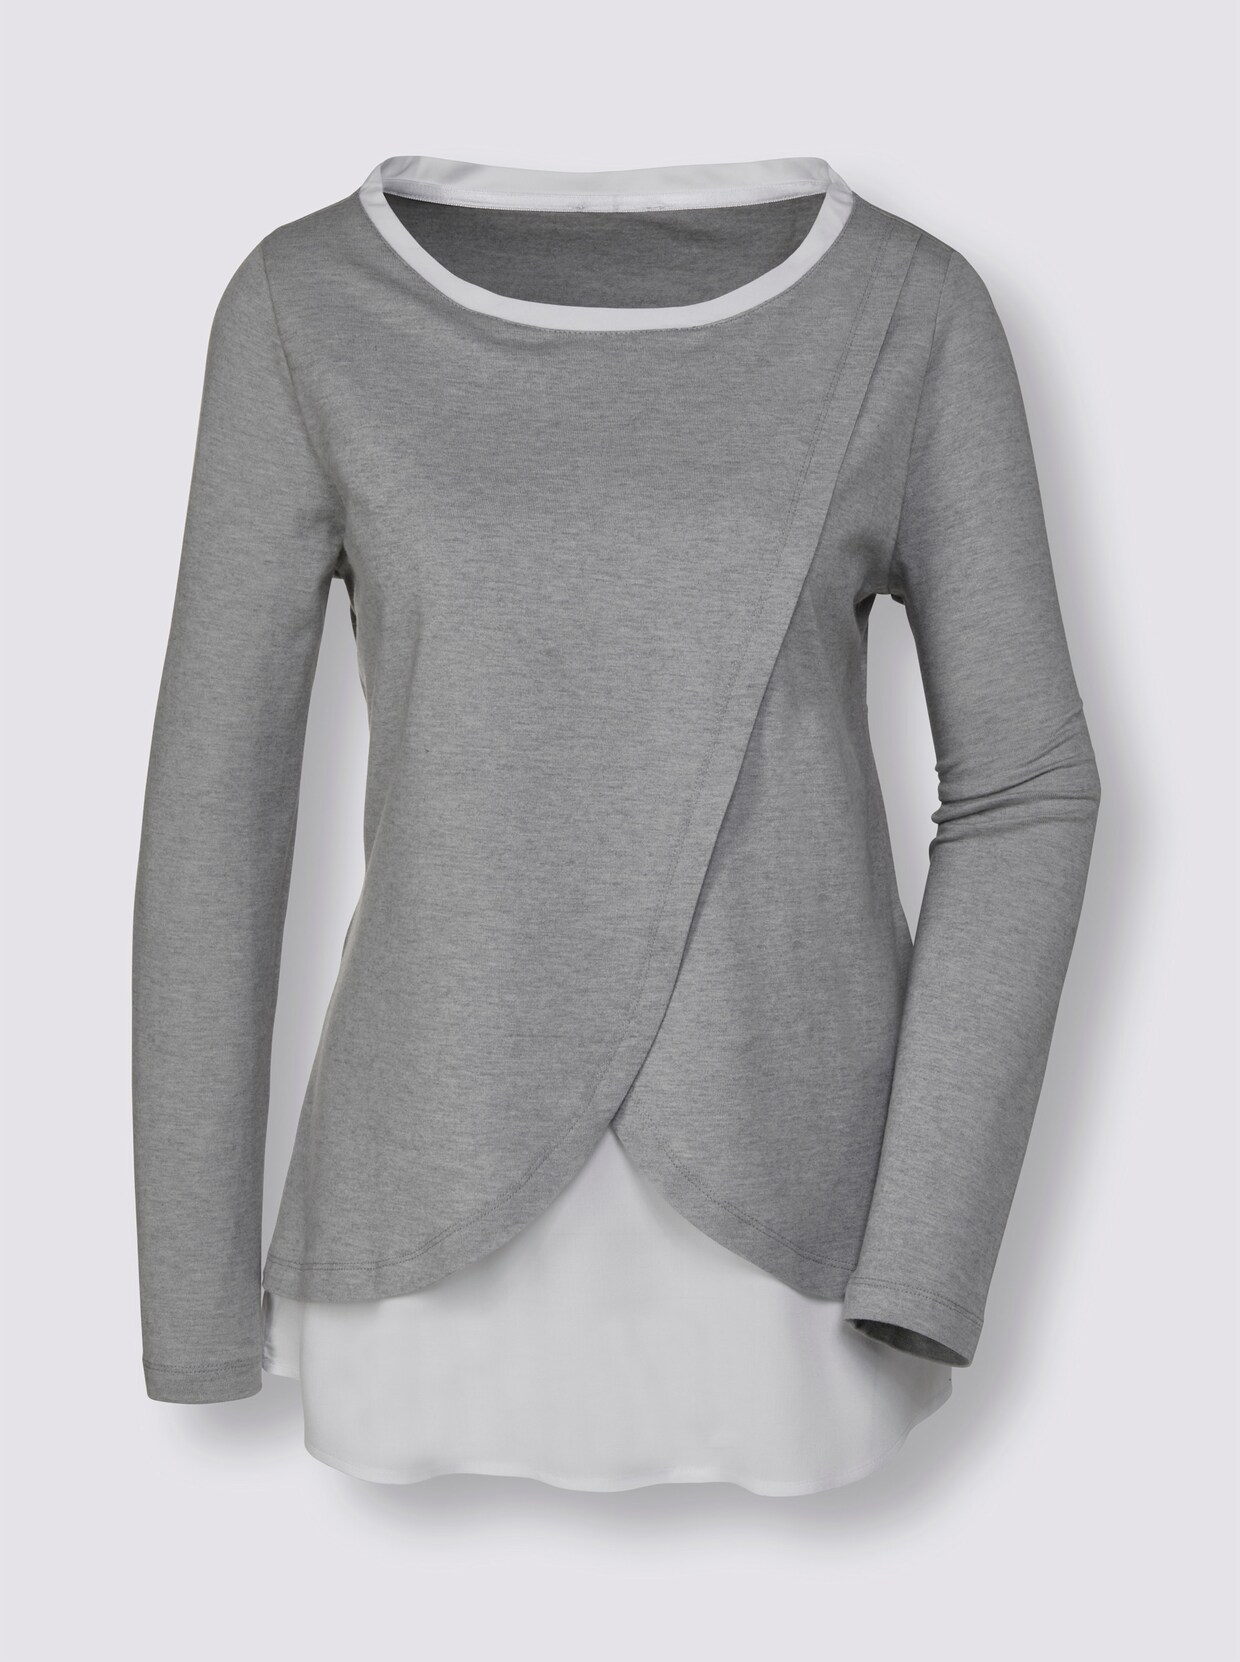 Creation L Premium Viskose-Woll-Shirt - grau-meliert